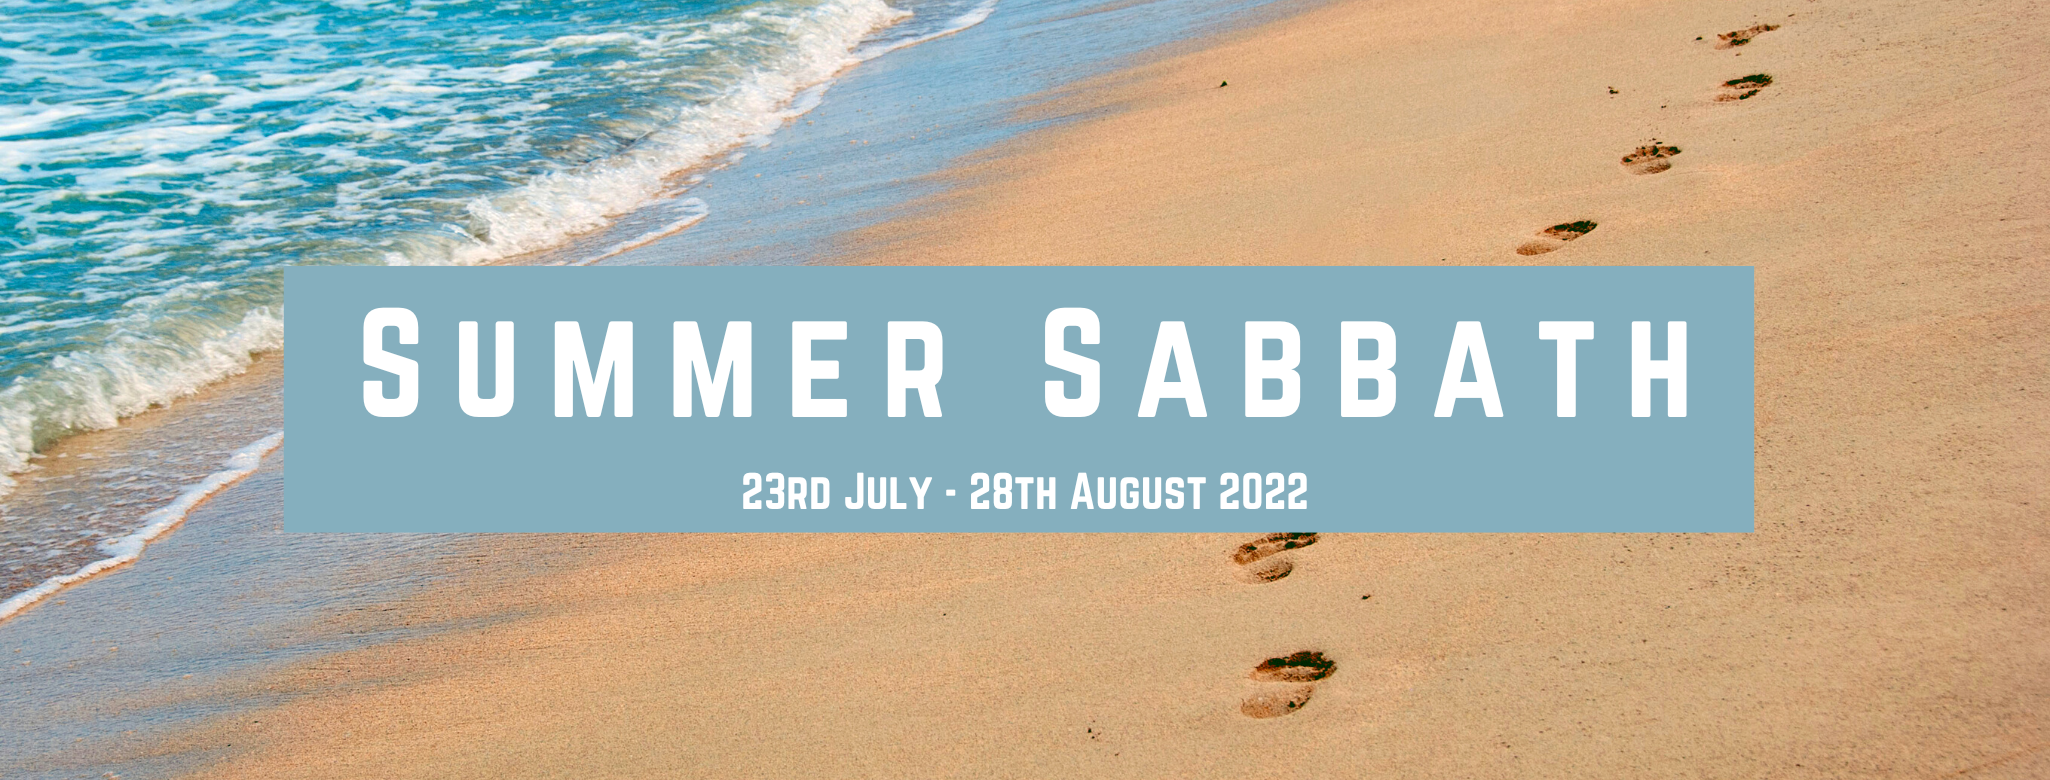 Summer Sabbath